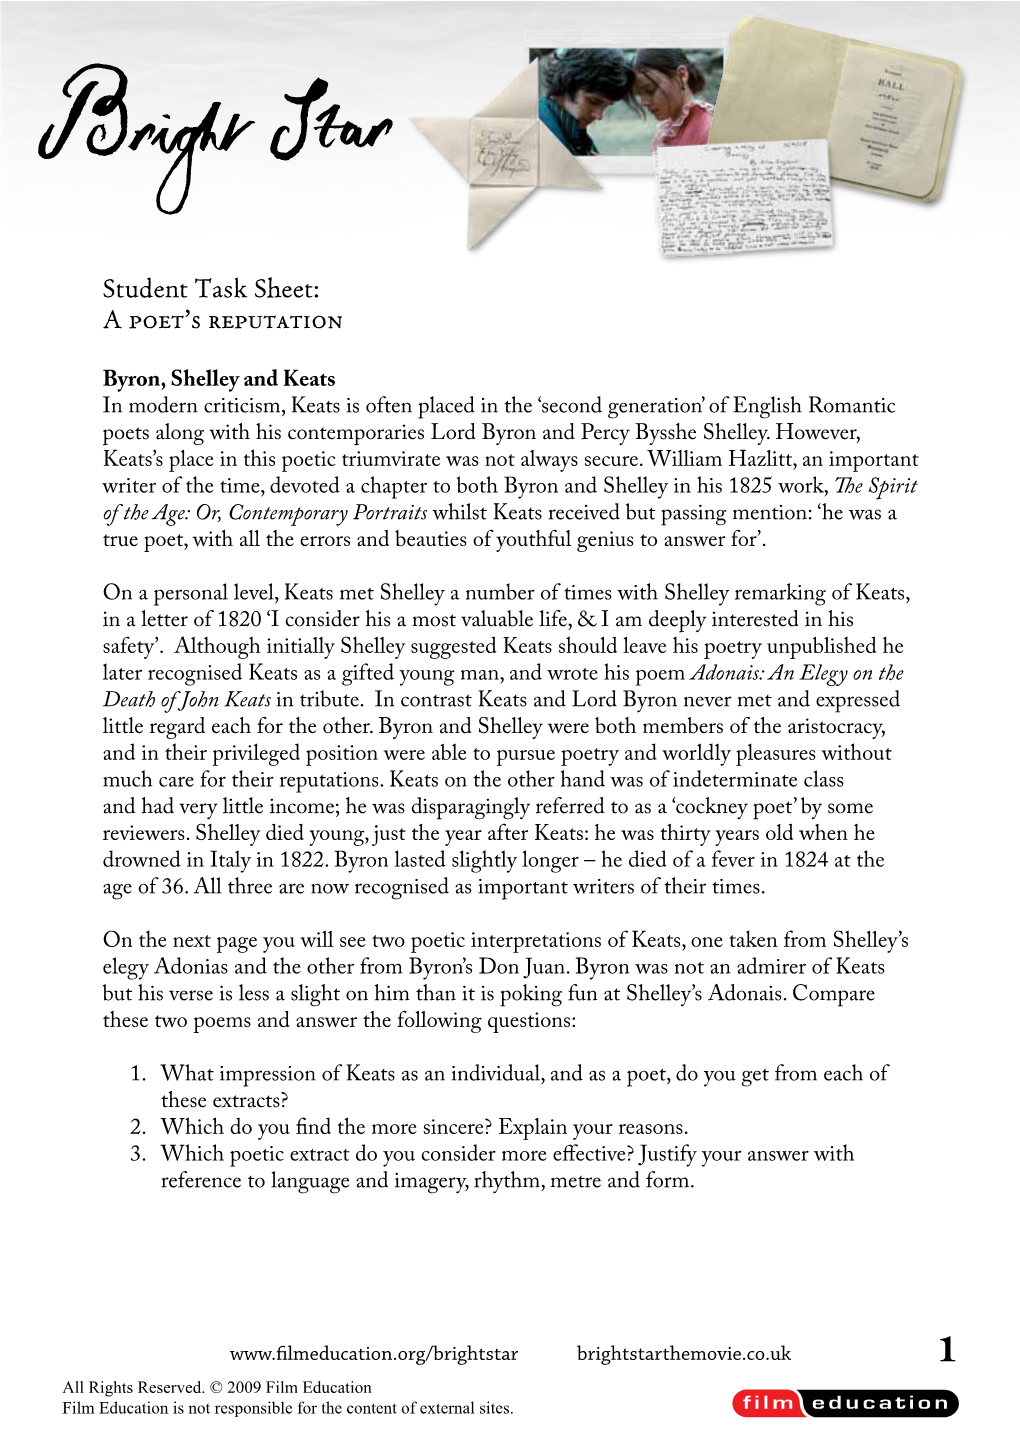 Student Task Sheet: a Poet's Reputation